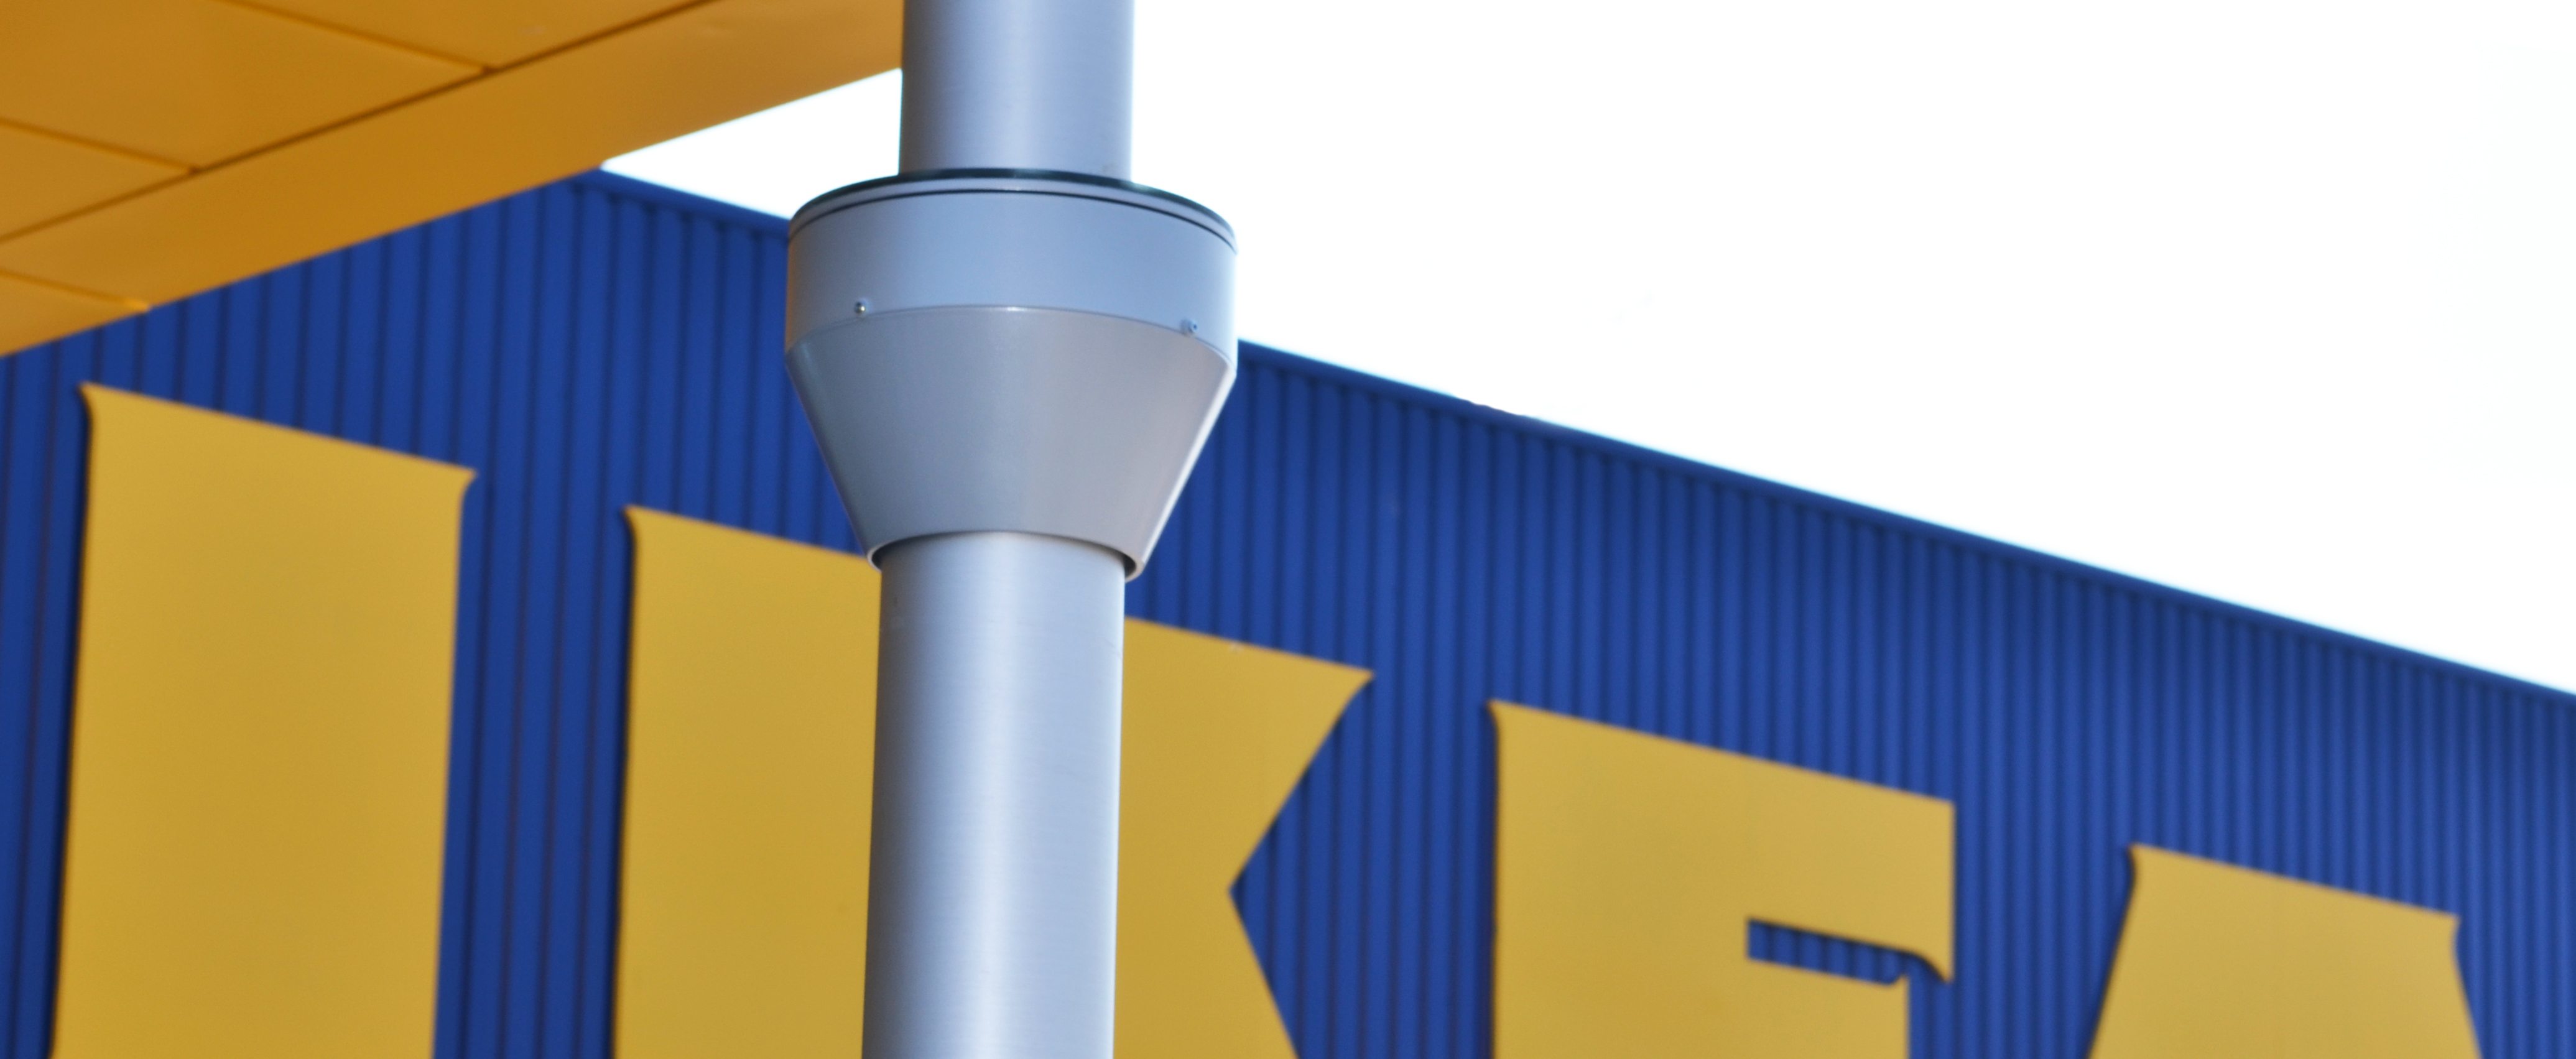 18 illuminate IKEA Duiven - | Flagpole lights